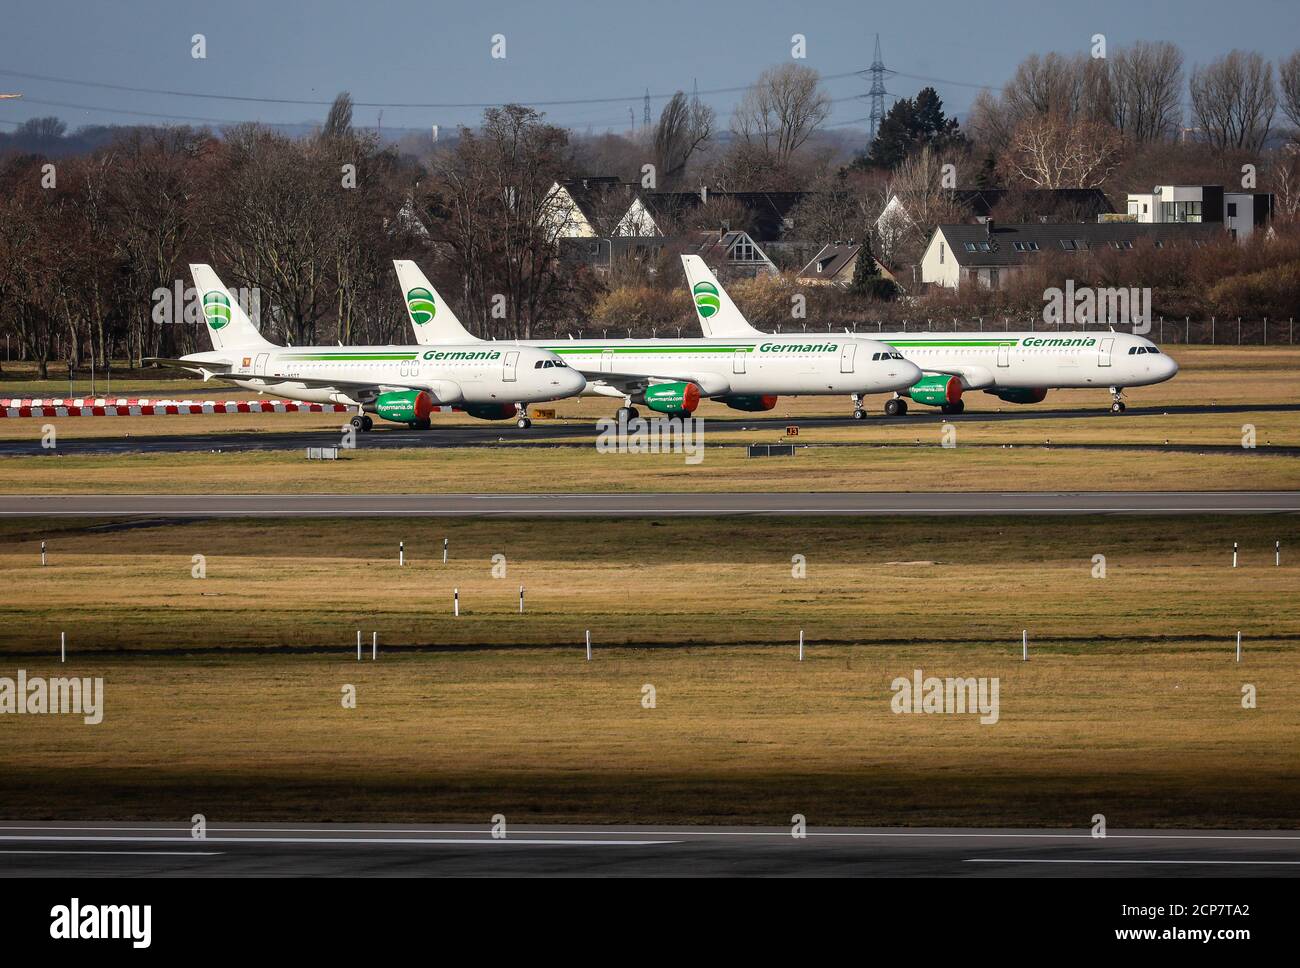 Duesseldorf, North Rhine-Westphalia, Germany - Germania aircraft parked at Duesseldorf Airport, DUS Stock Photo